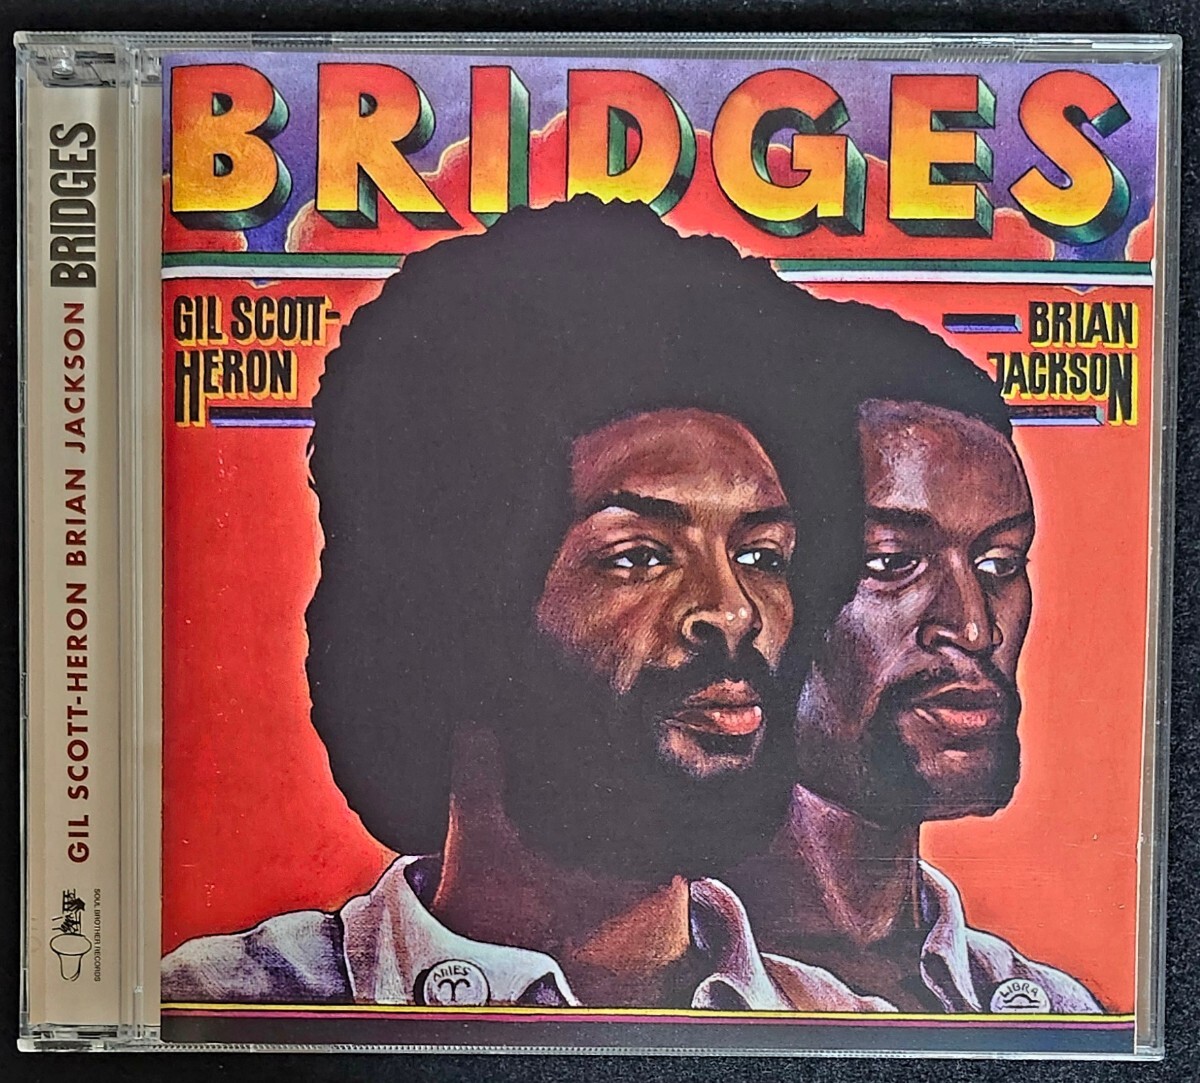 Bridges Gil Scott-Heron ギルスコットヘロン ブライアンジャクソン ジャズファンク 詩人 レアグルーヴ エレピ メロウグルーヴ ソウル 名盤